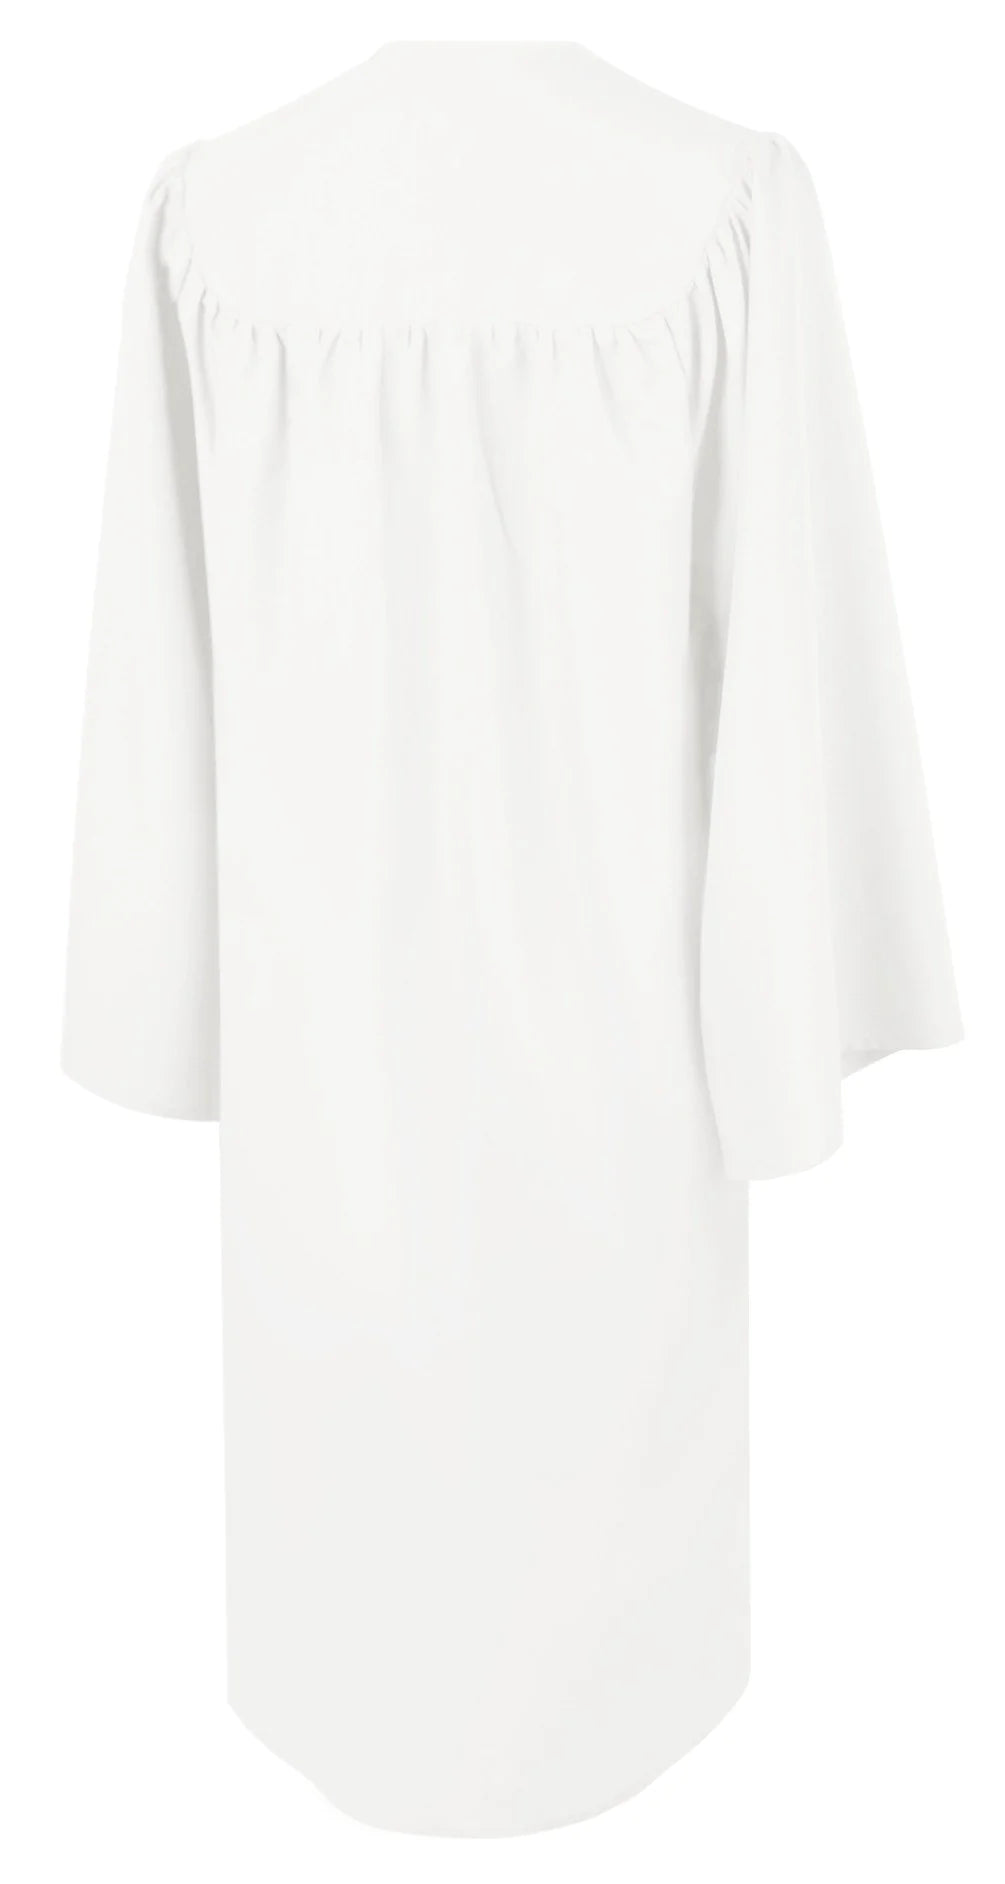 Matte White Baptism Robe - Churchings